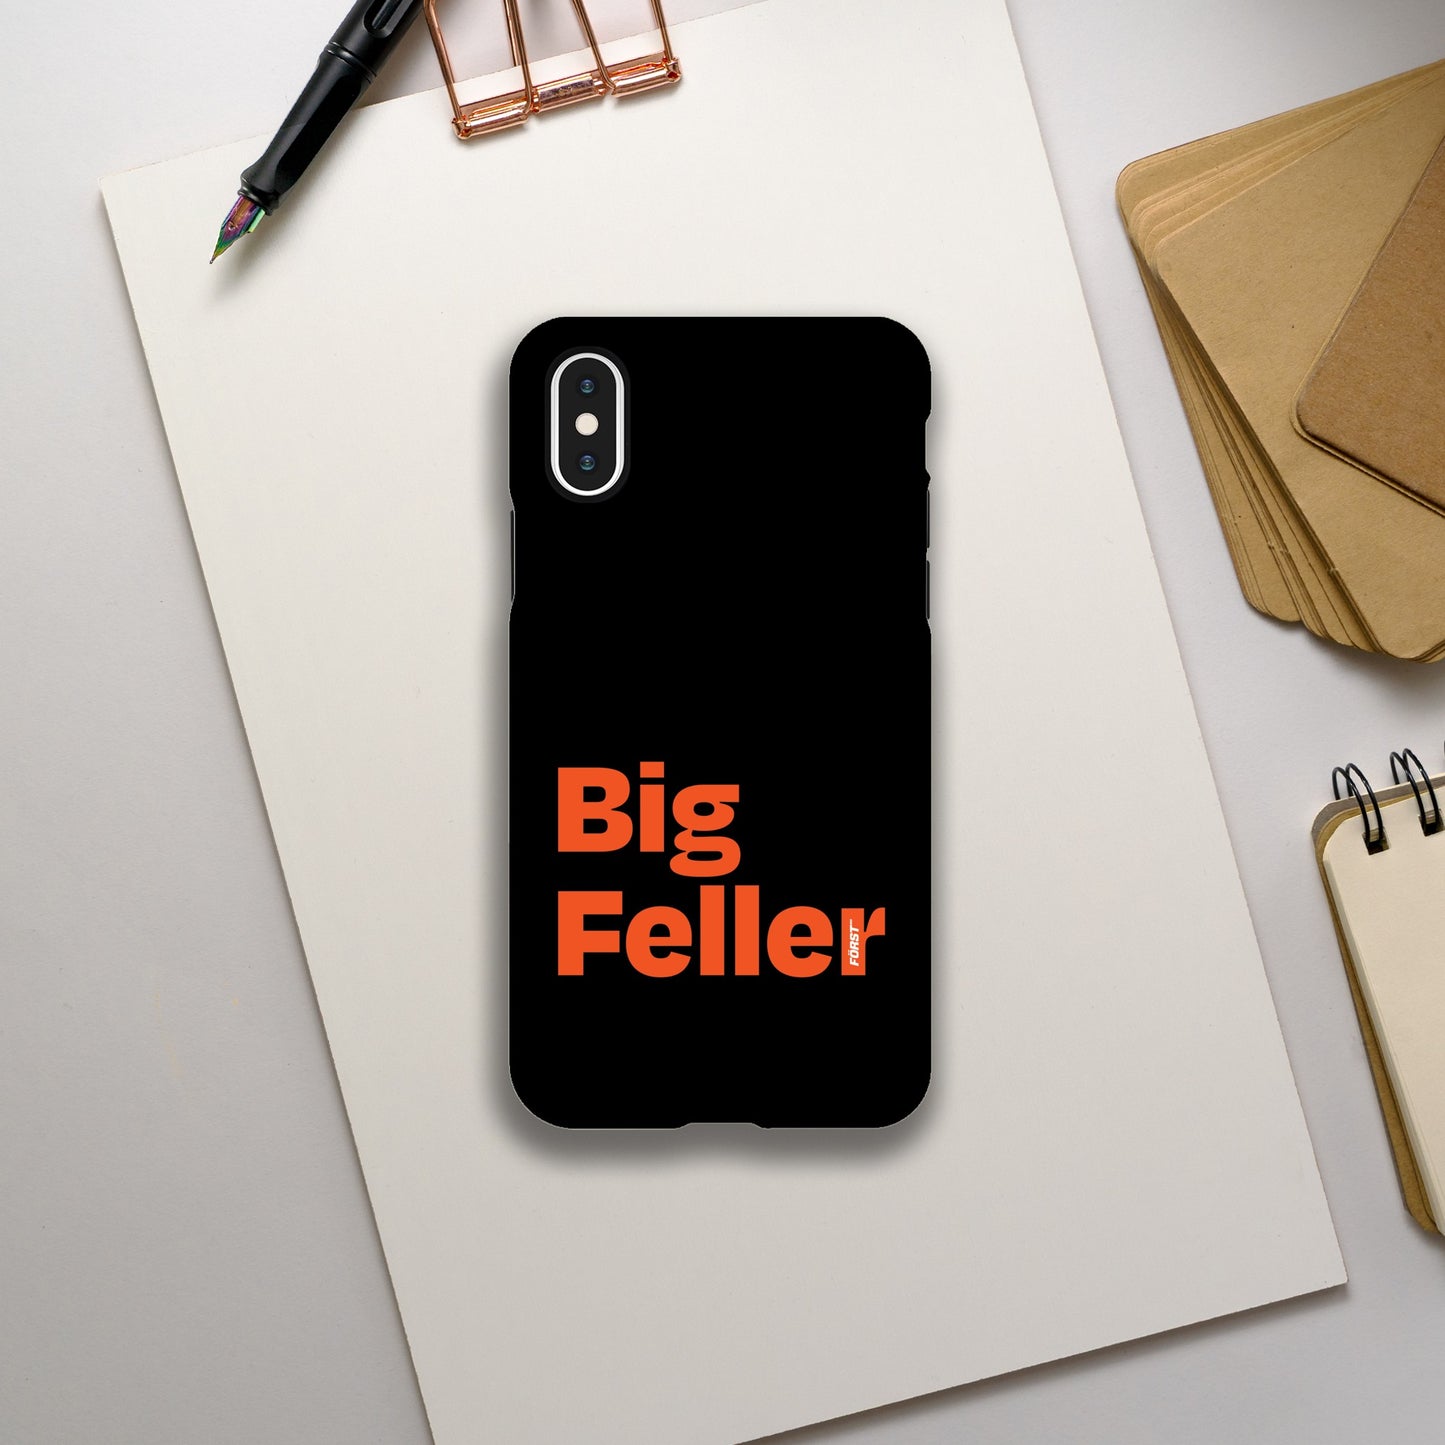 Big Feller iPhone tough cases